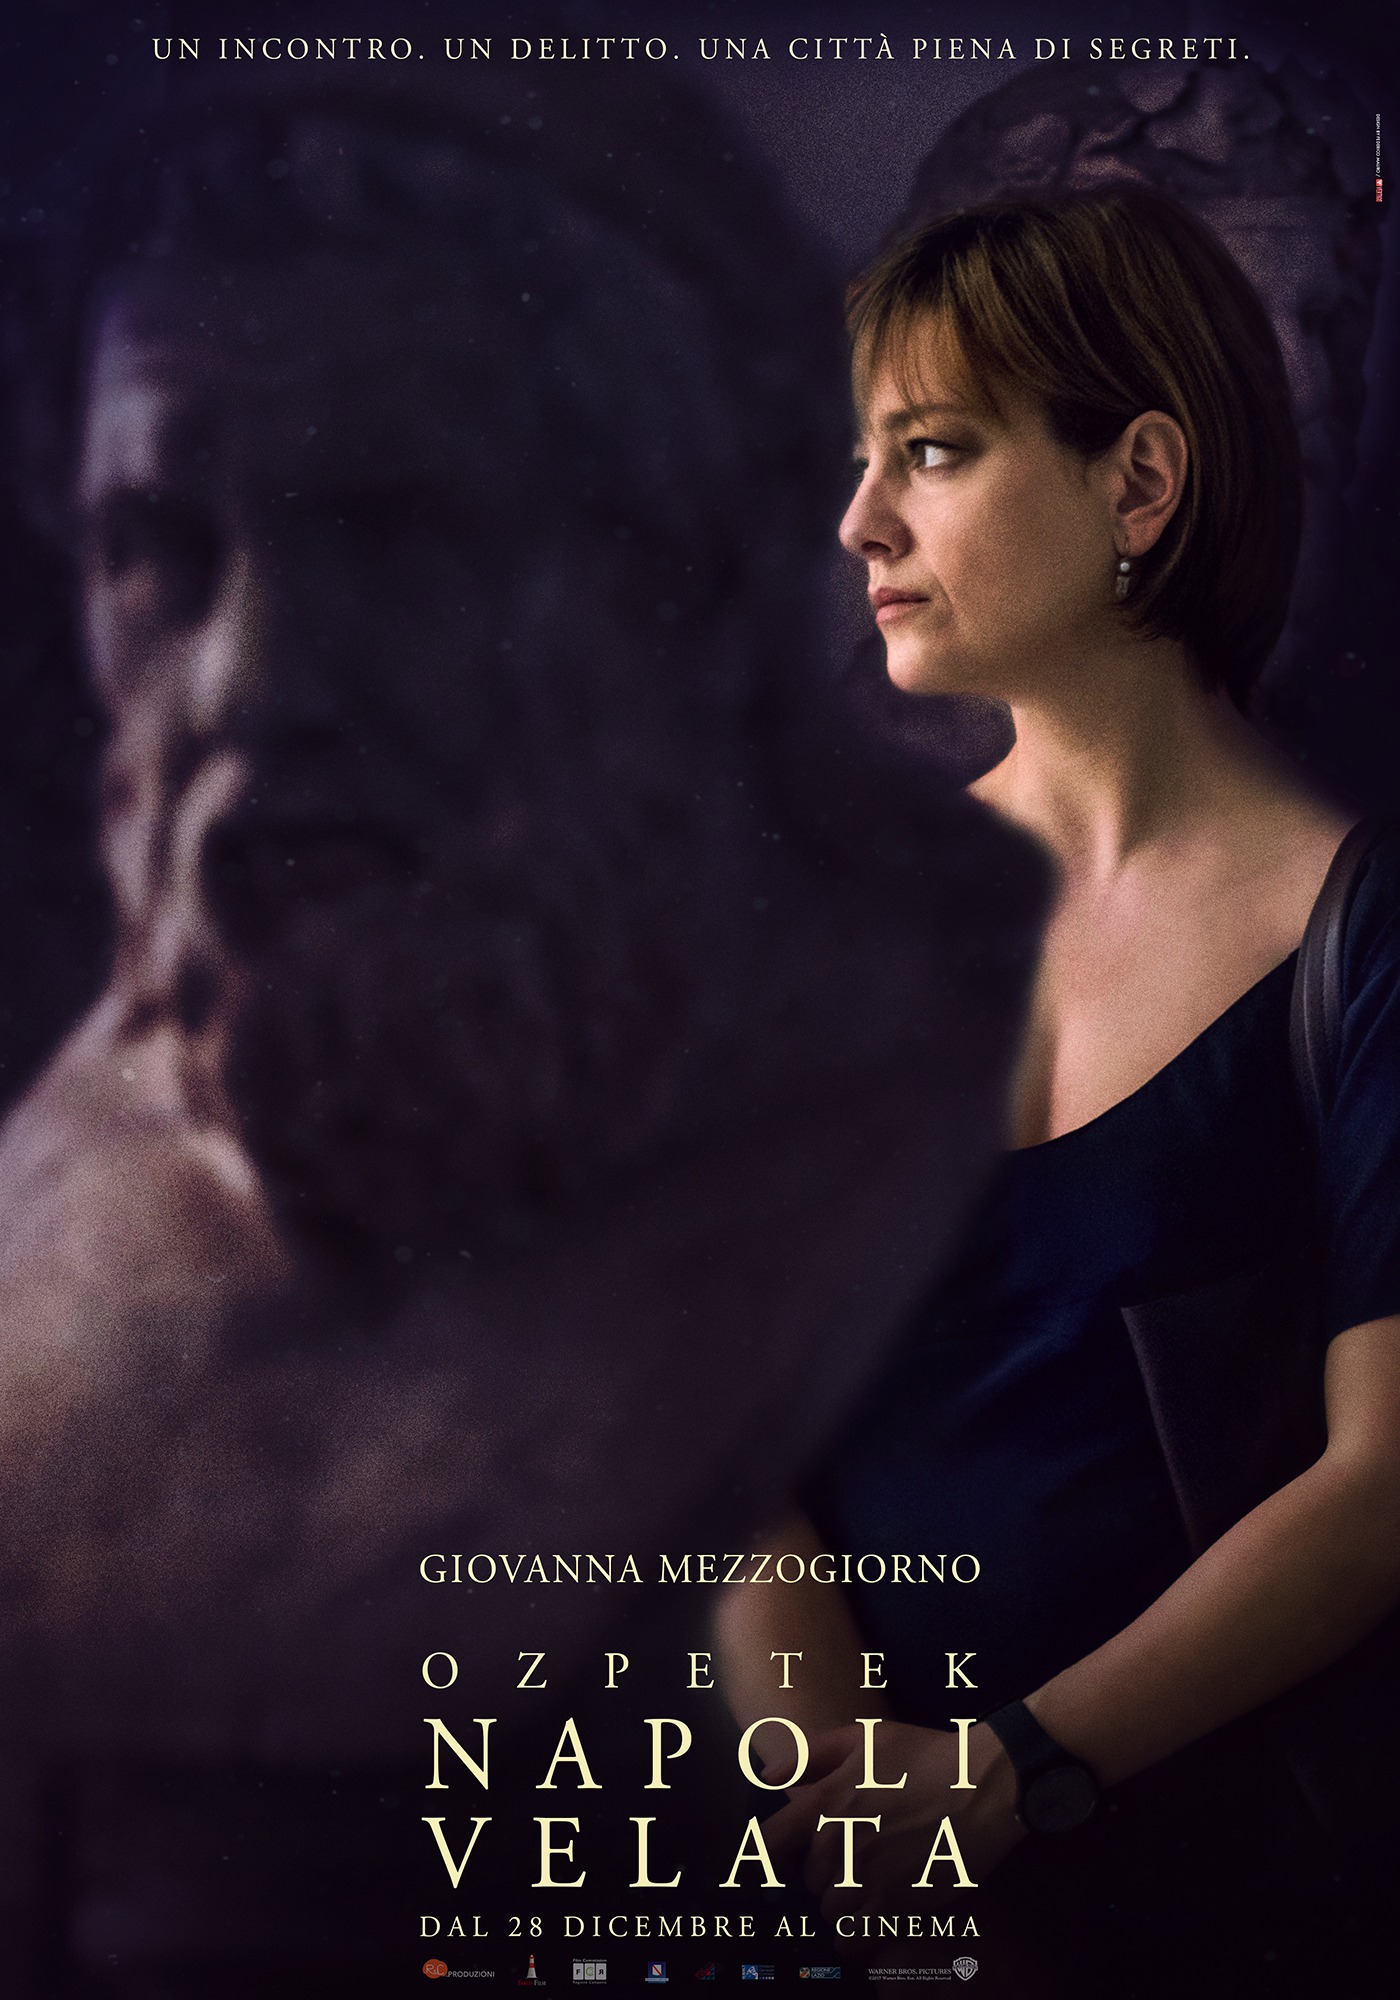 Mega Sized Movie Poster Image for Napoli velata (#4 of 4)